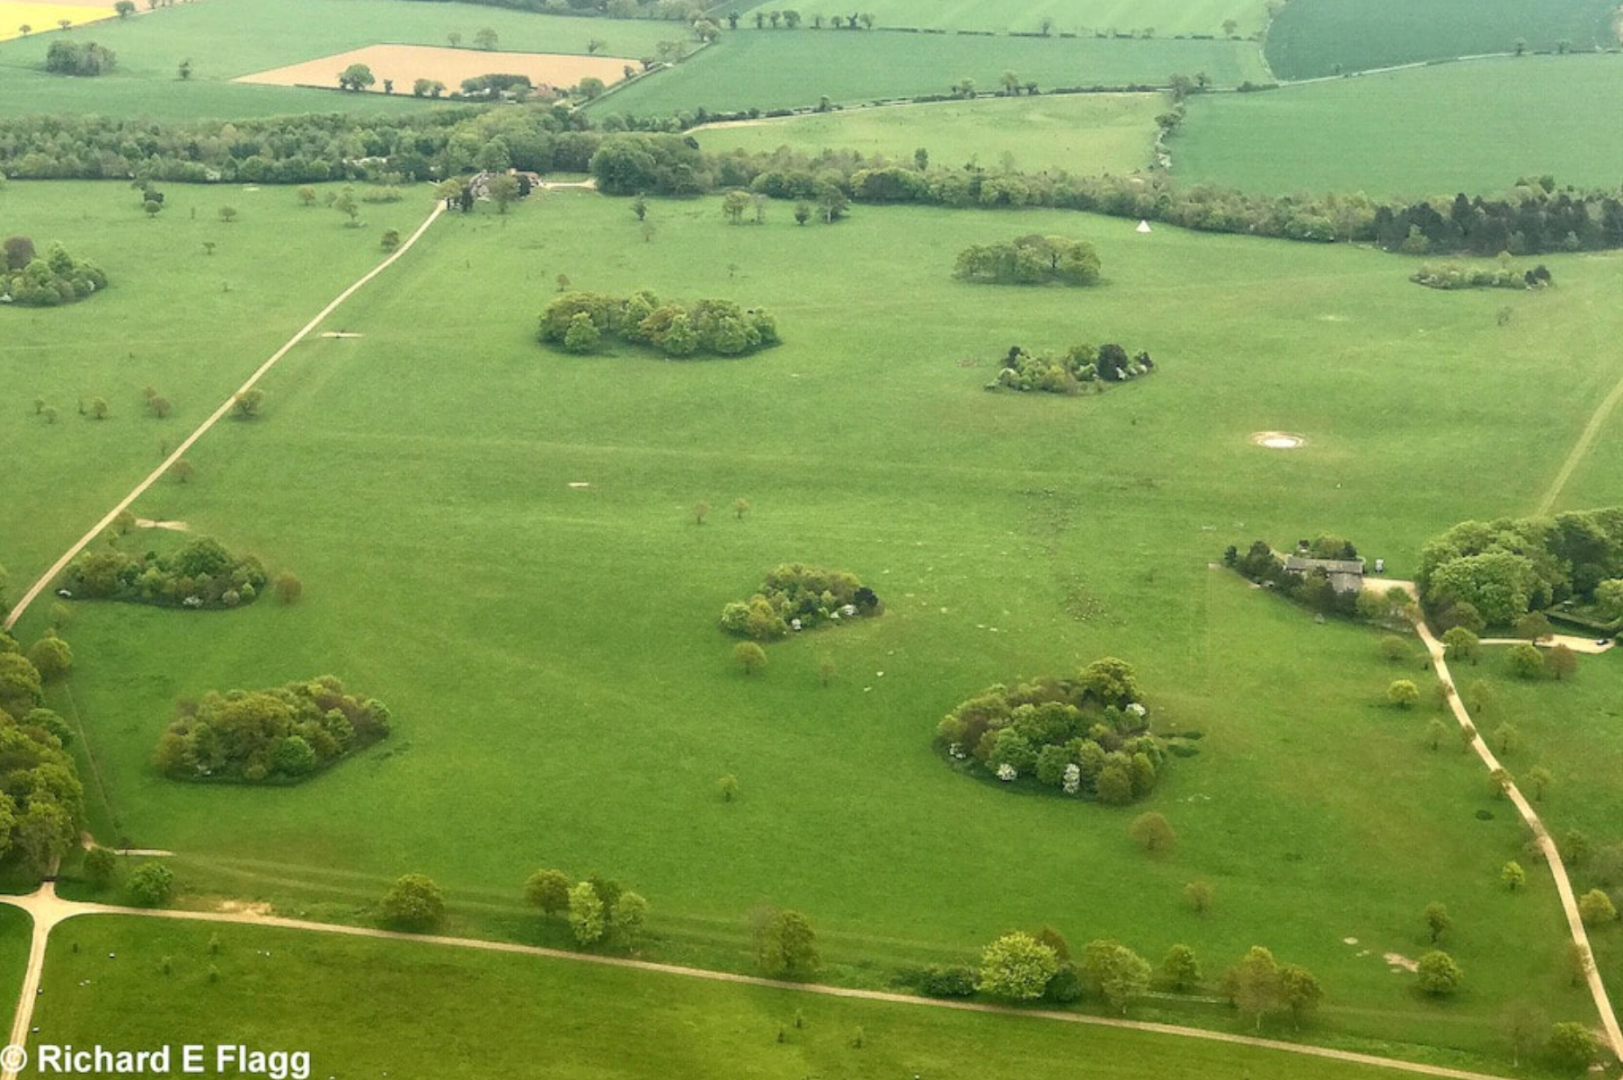 001Aerial View of Gunton Park Airstrip - 13 May 2017.png